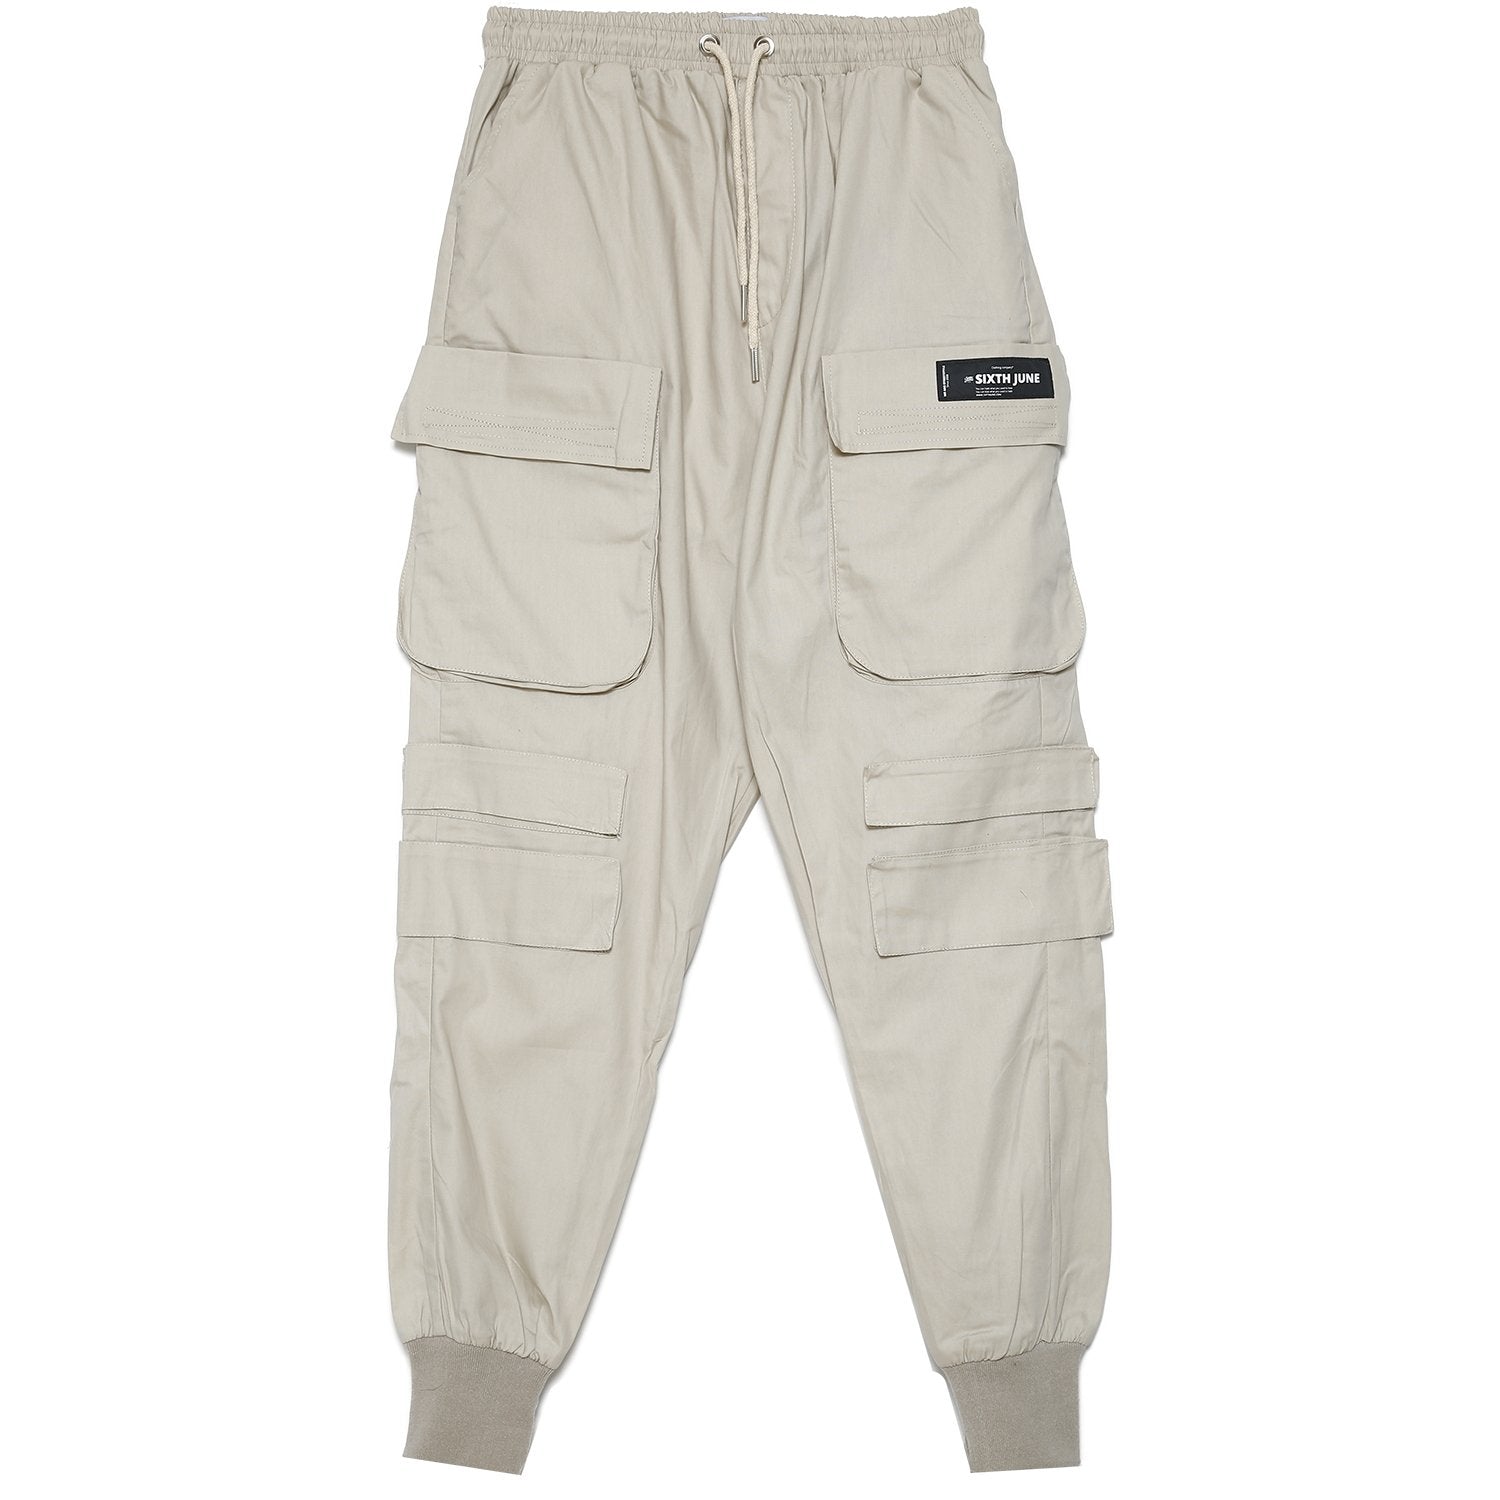 Sixth June - Pantalon cargo tactique poches beige clair